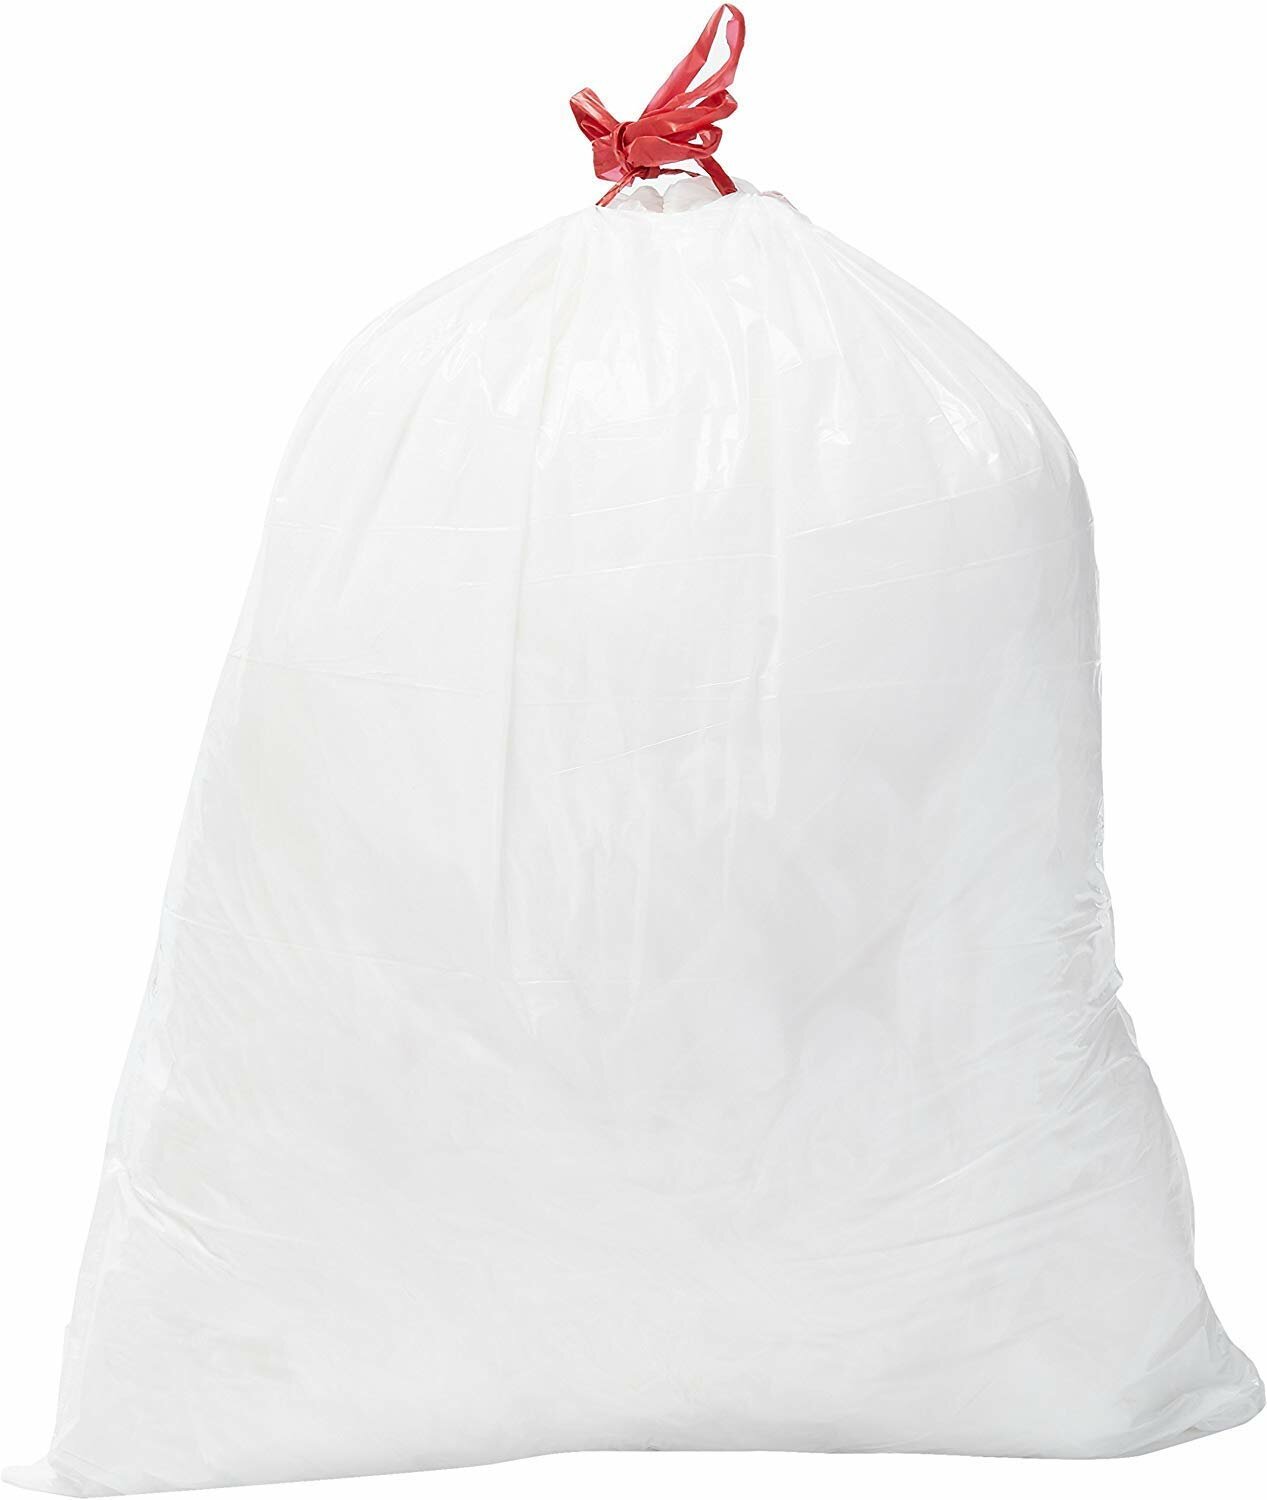 Nine Stars 21 Gallon Trash Bags White 45 Count